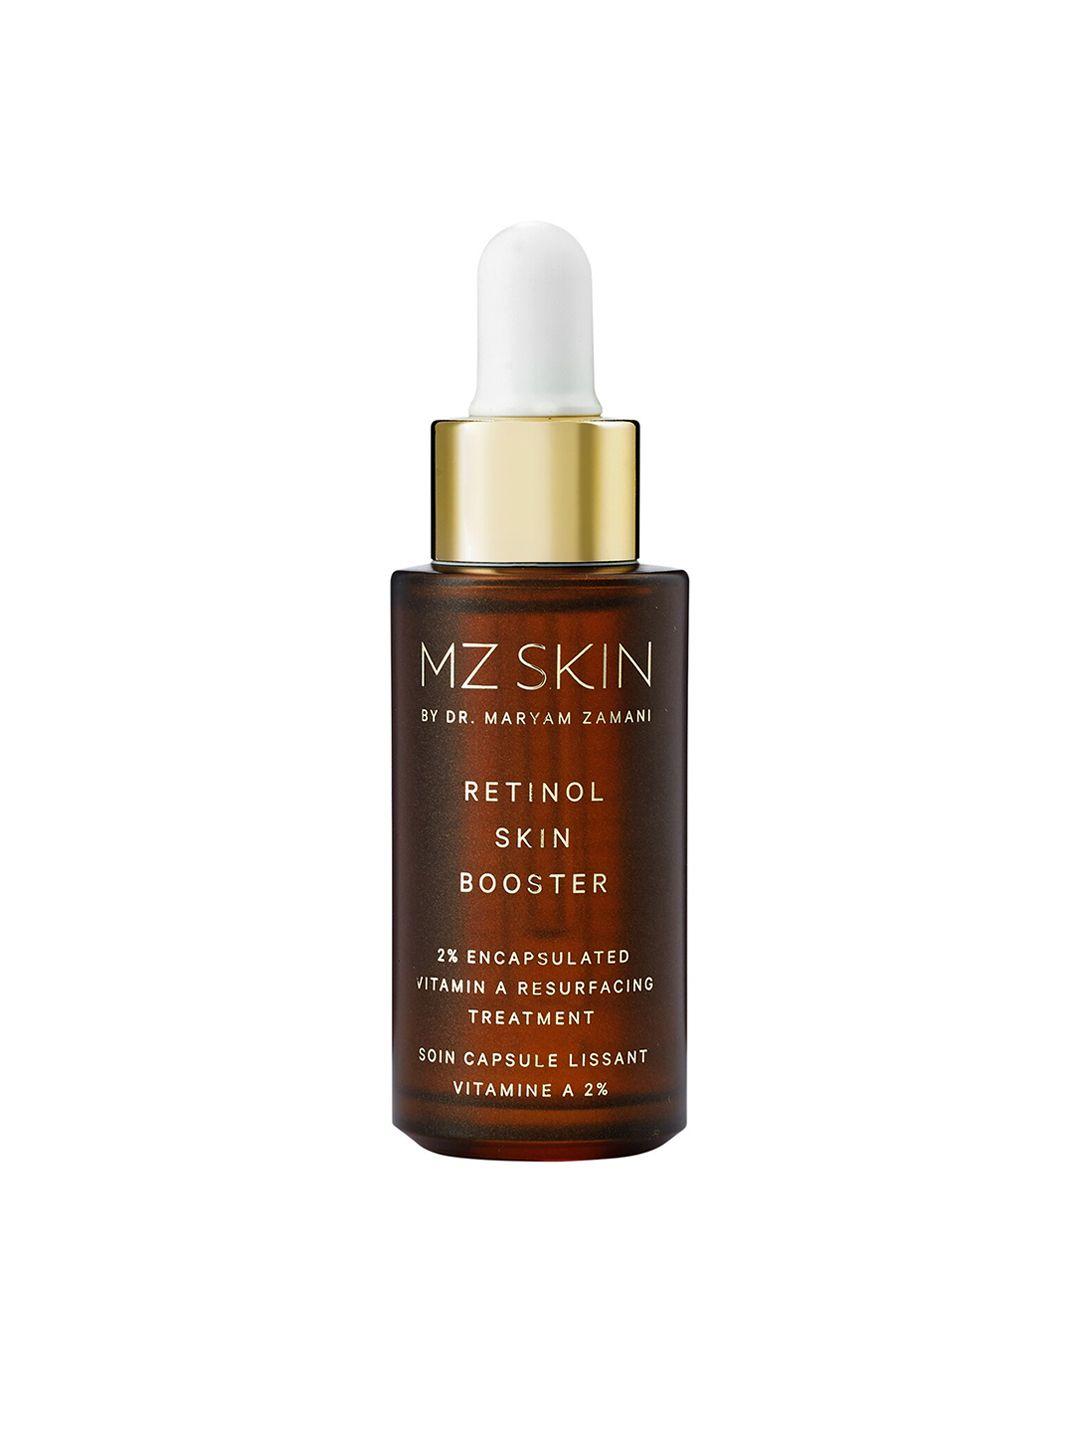 mz skin retinol skin booster 2% encapsulated vitamin a resurfacing treatment - 20ml